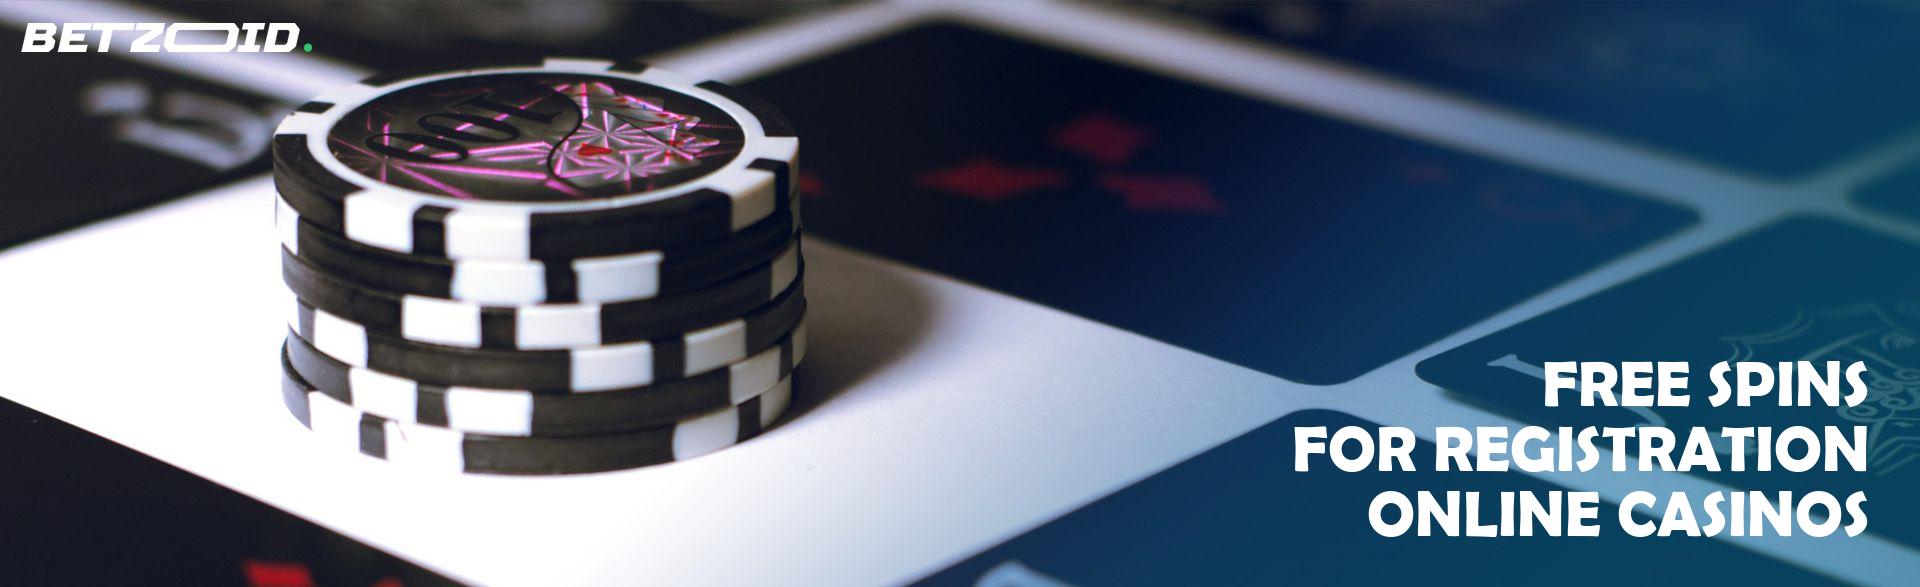 Free Spins For Registration Online Casinos.